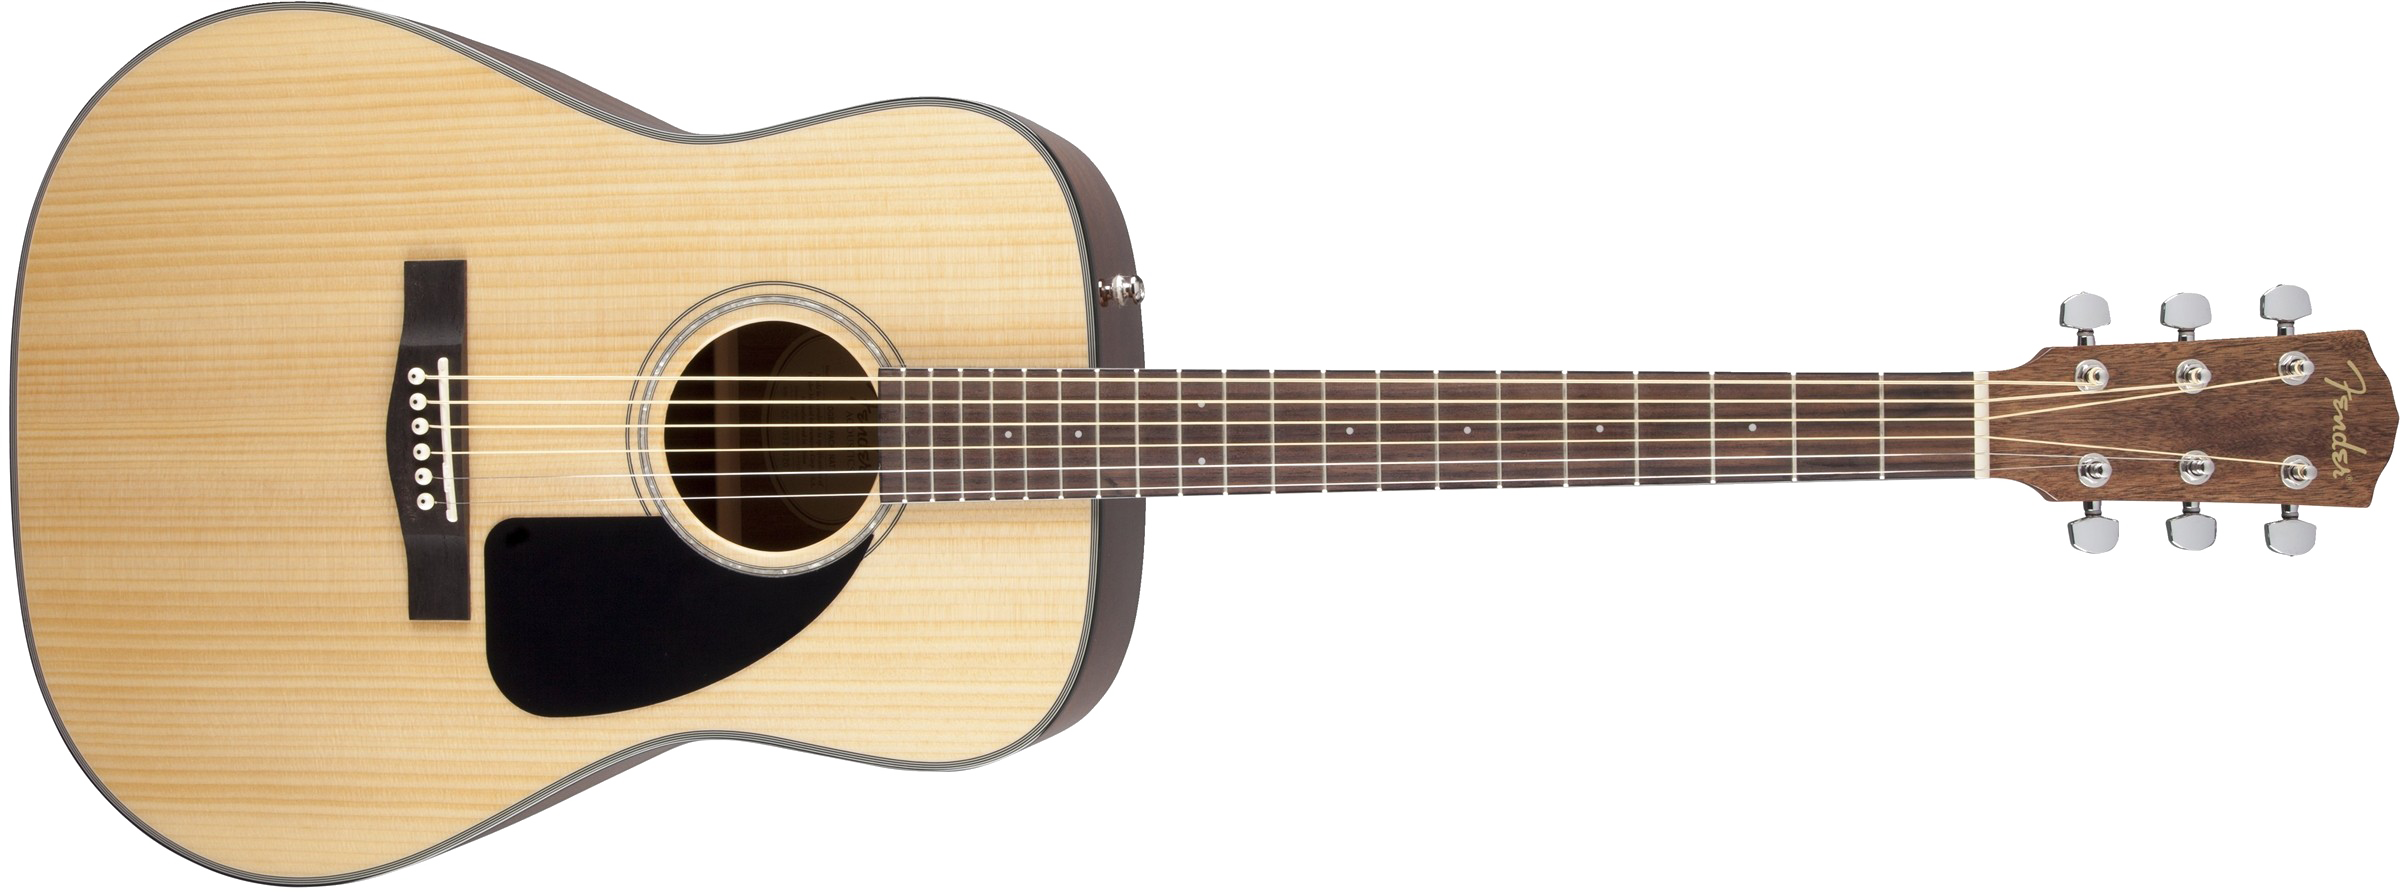 Acoustic Guitar PNG Transparent Image